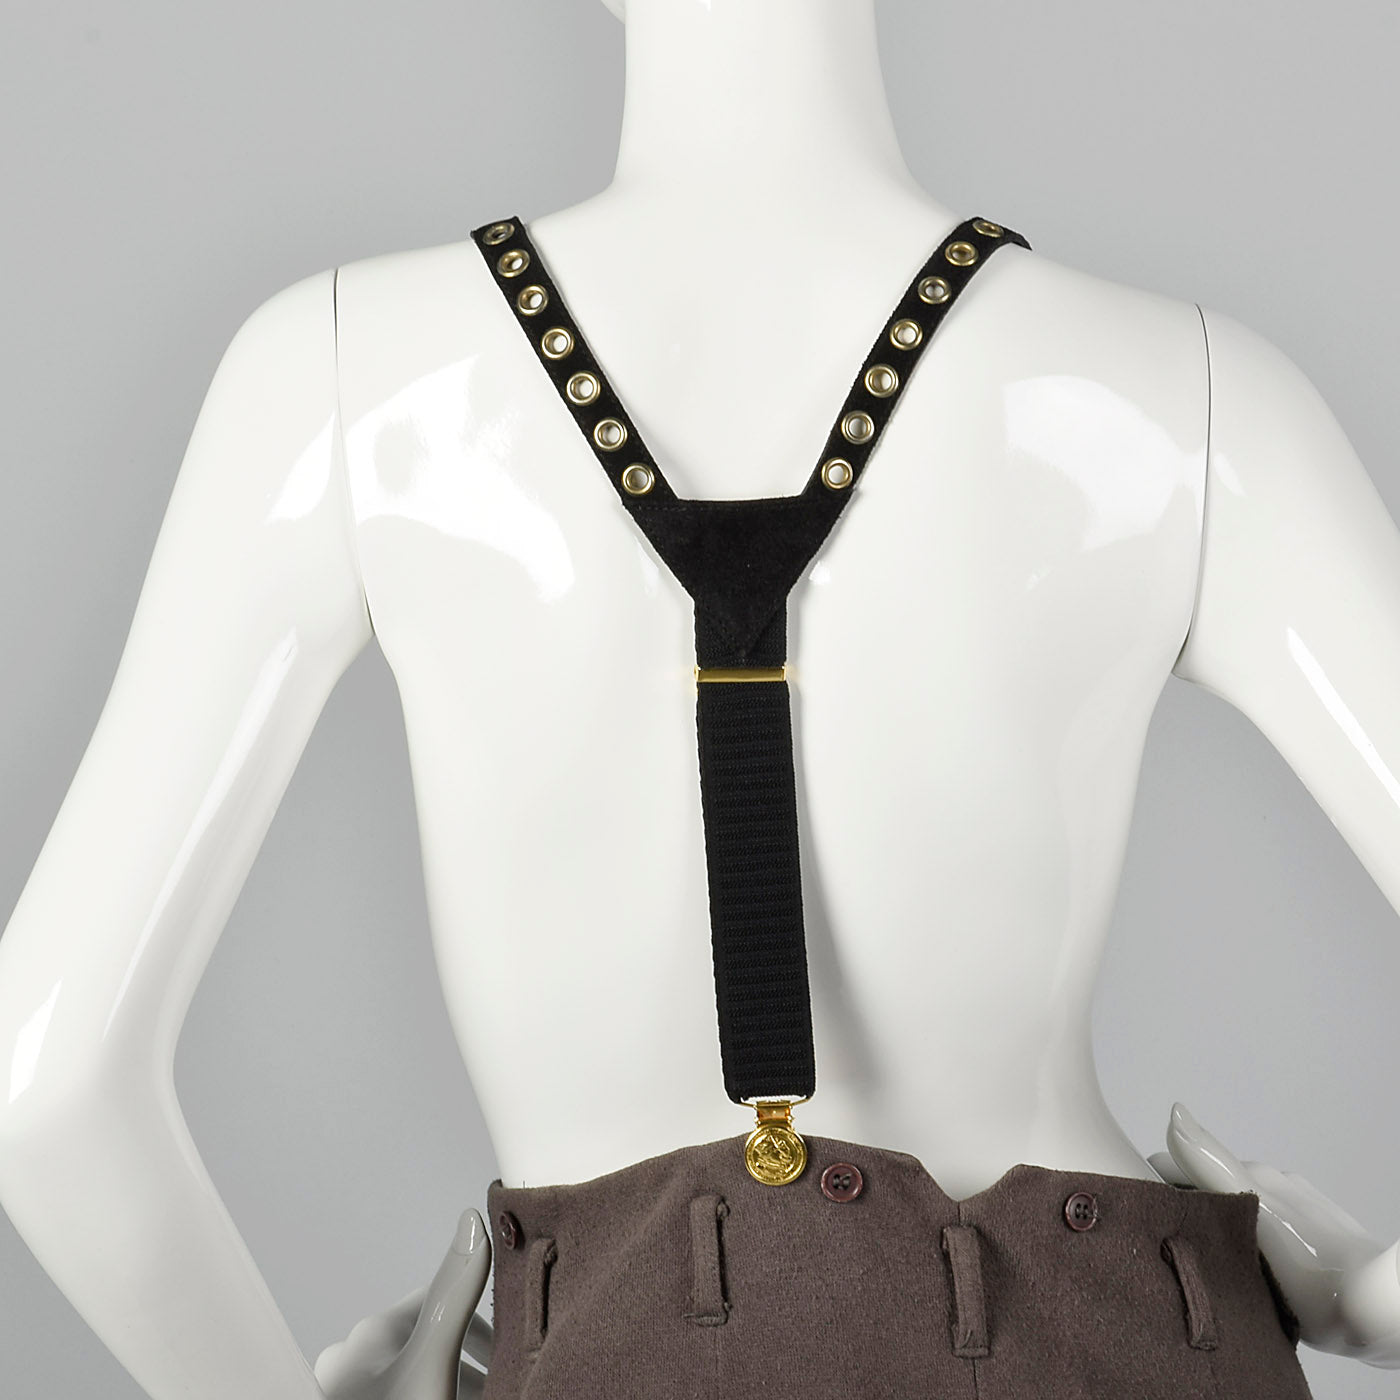 Sonia Rykiel Black Suede Suspenders with Gold Eyelets